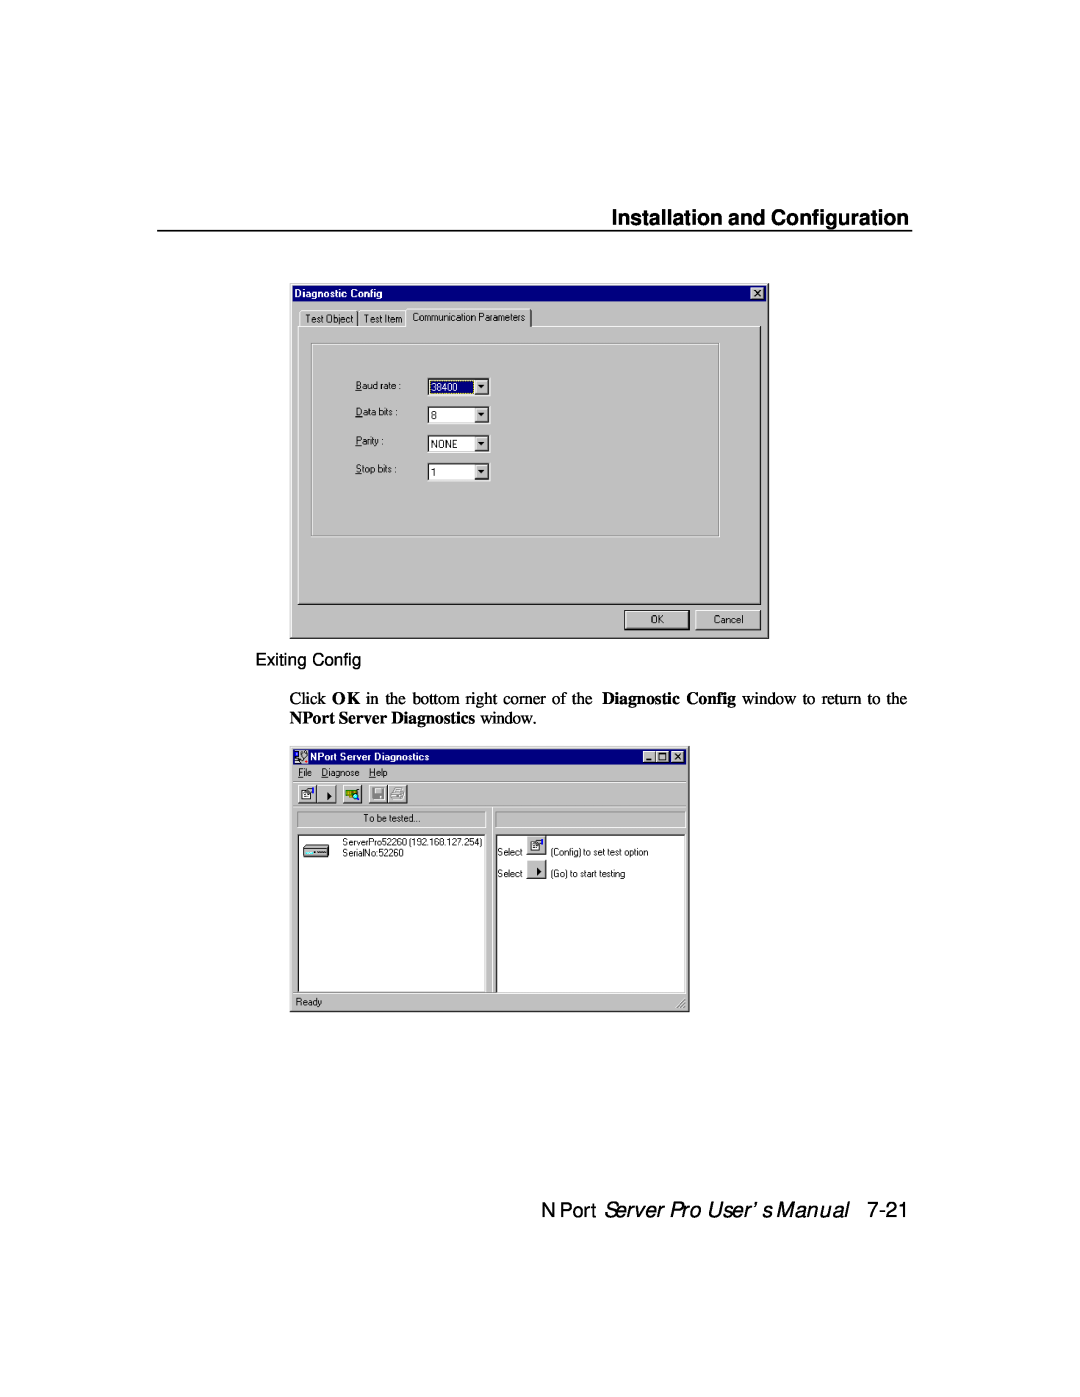 Moxa Technologies DE-308, DE-303 manual Installation and Configuration, NPort Server Pro User’s Manual, Exiting Config 